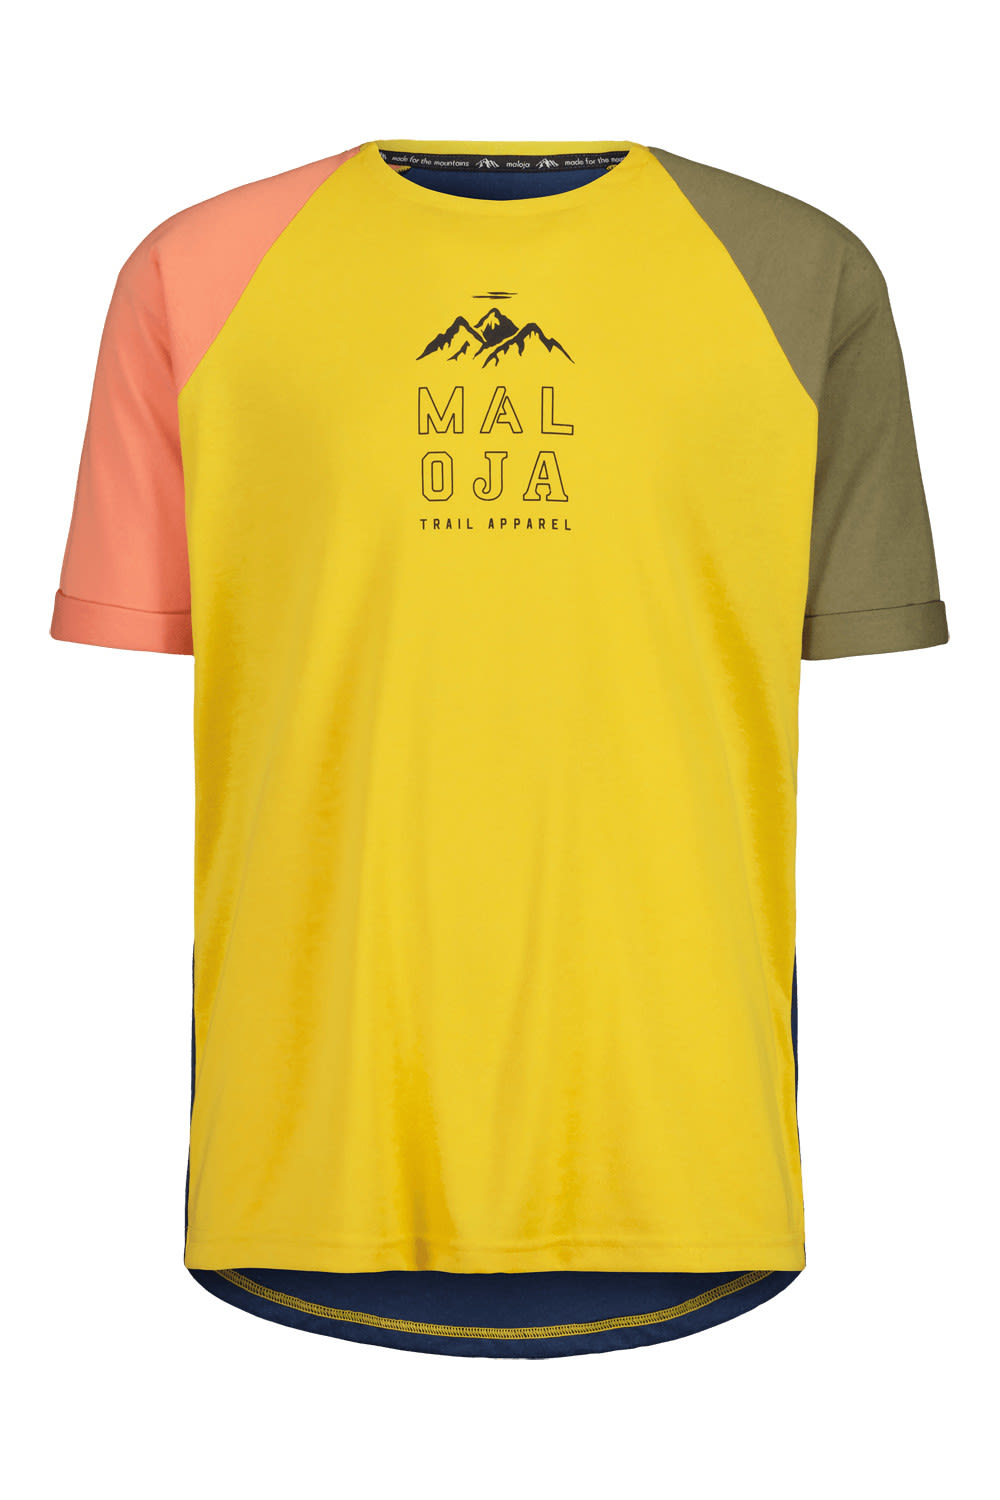 Maloja M Anderterm. T-shirt Colorblock / Gelb | Herren Kurzarm-Radtrikot